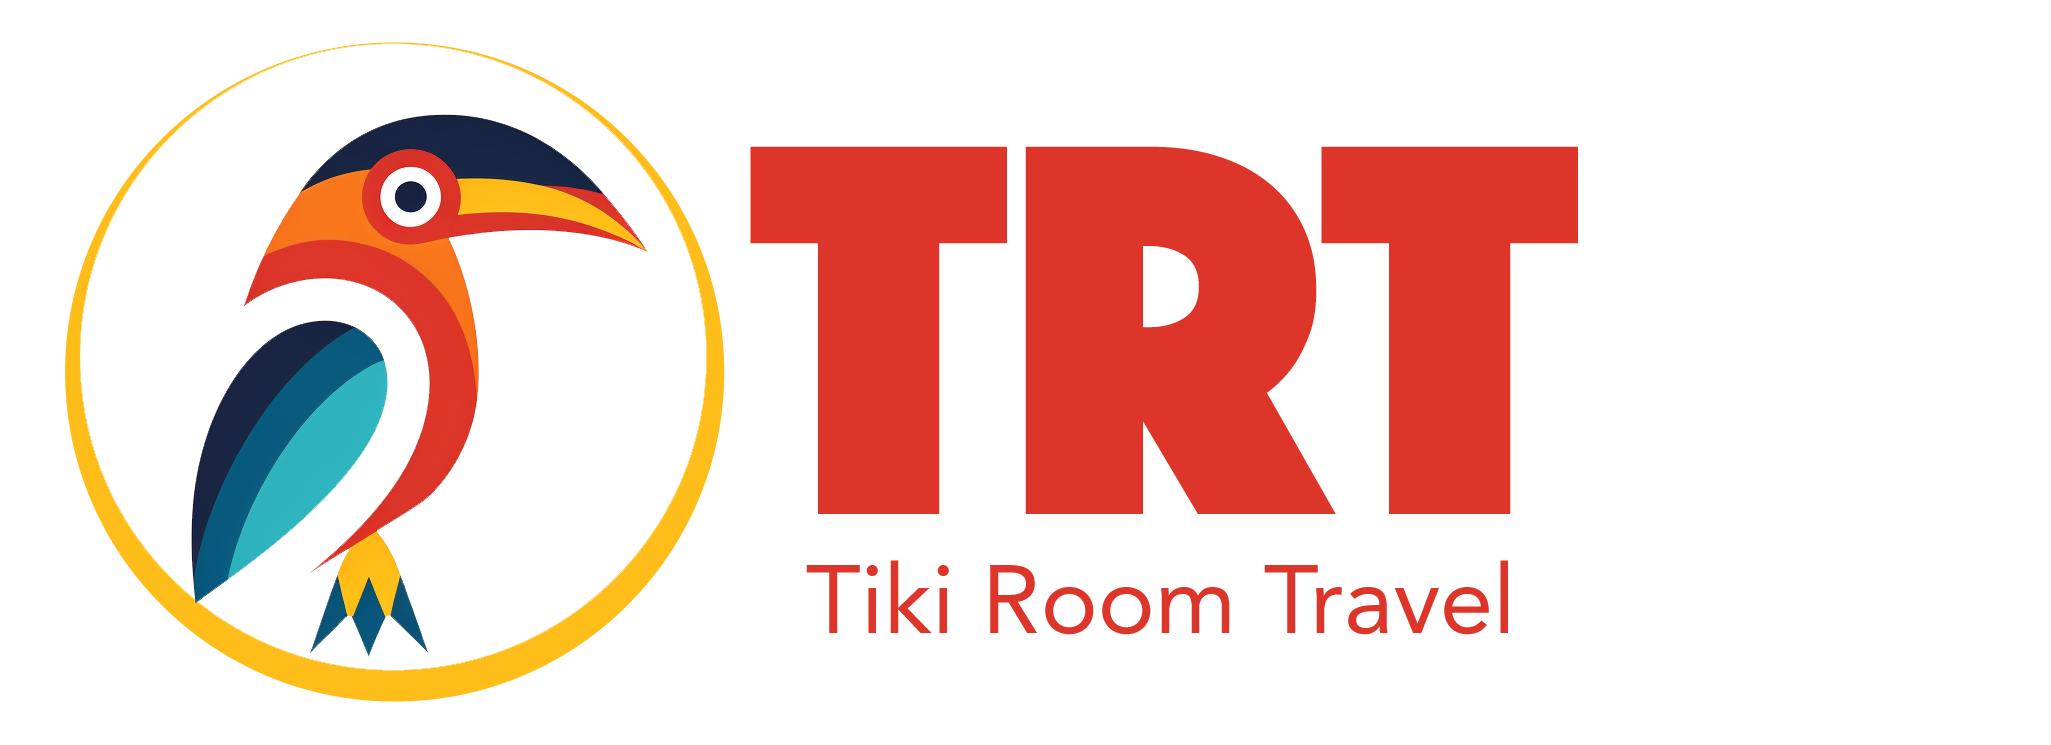 Tiki Room Travel